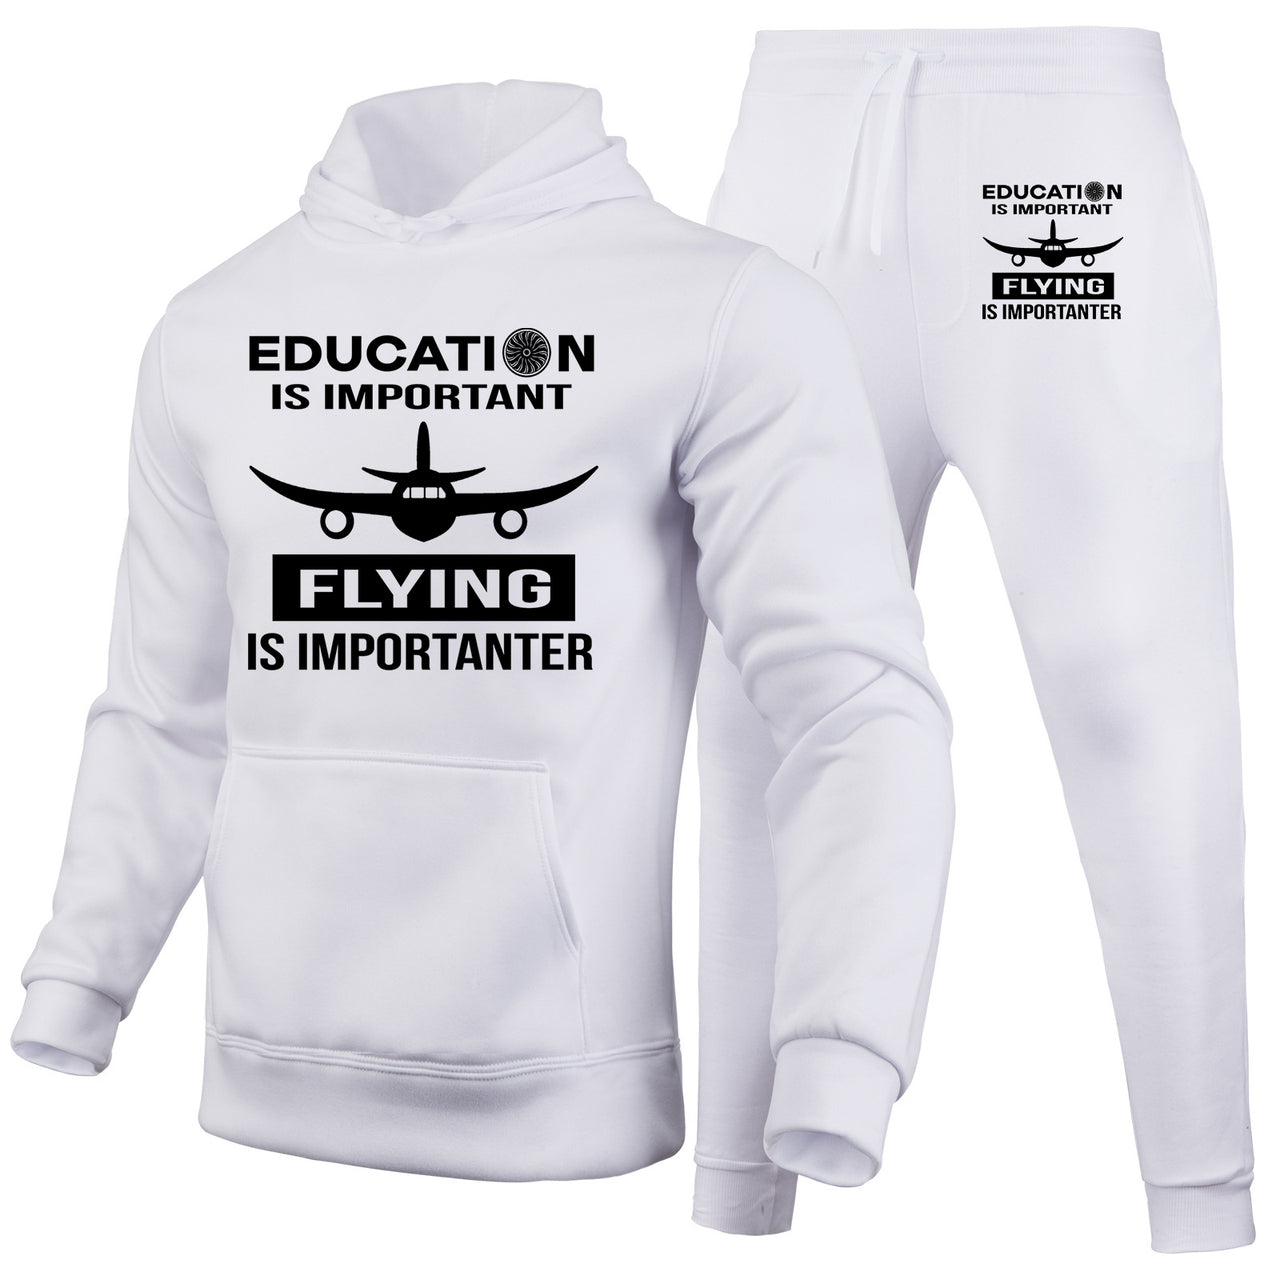 Flying is Importanter Designed Hoodies & Sweatpants Set